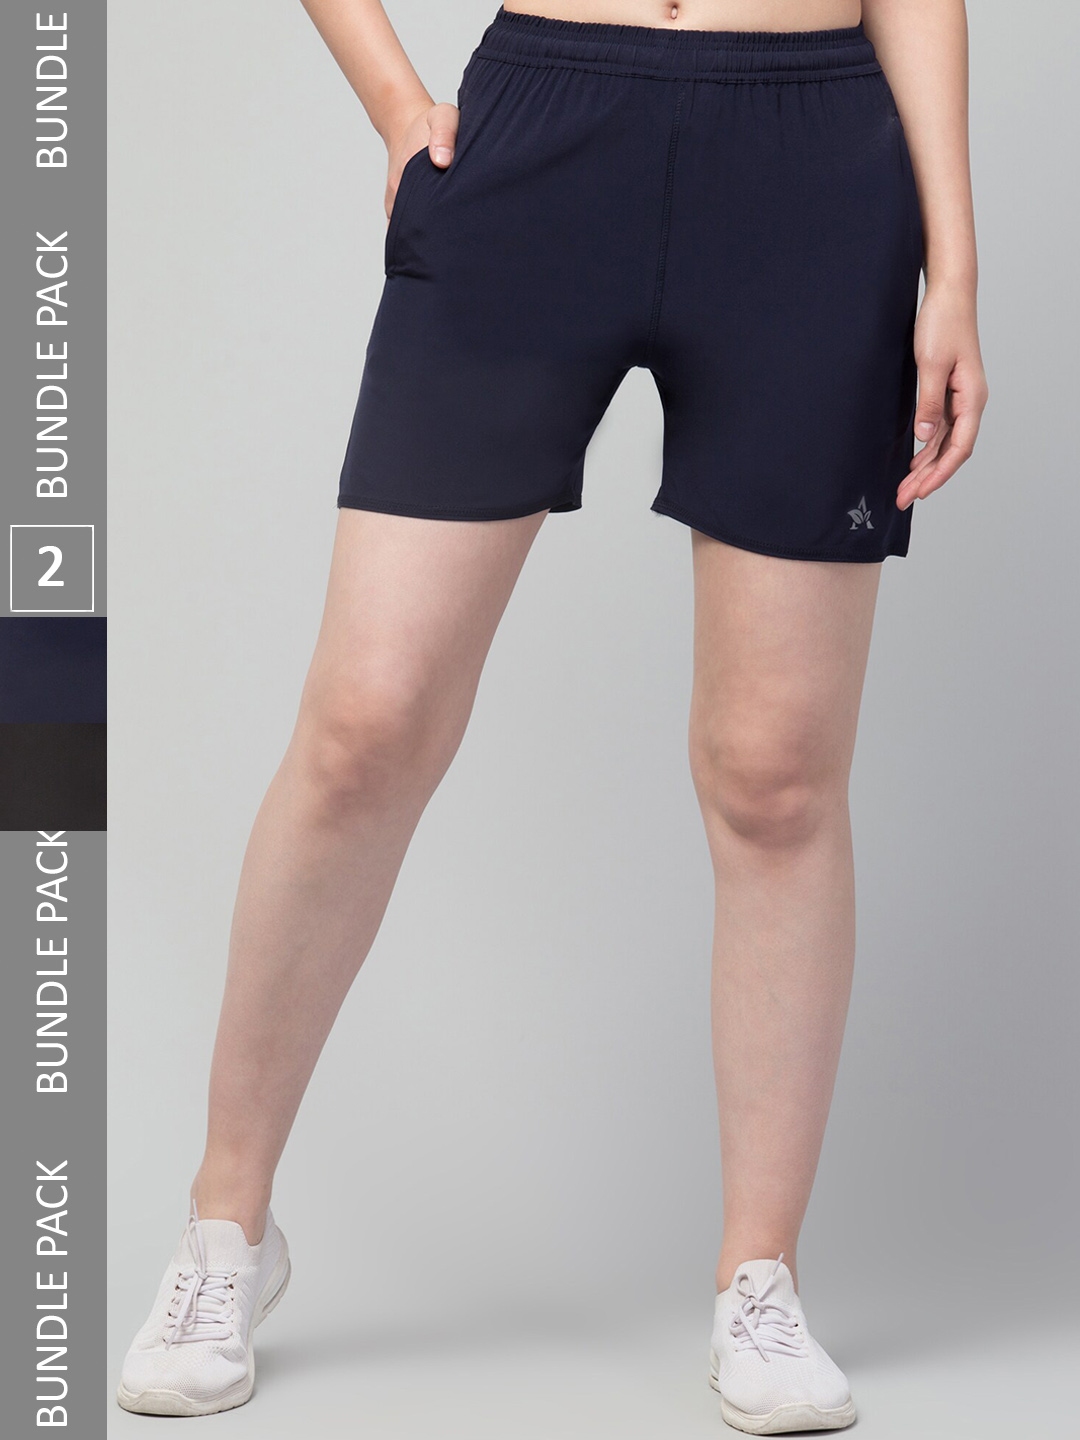 Solid Polyamide Spandex Mid Thigh Length Cycling Shorts- CS-4